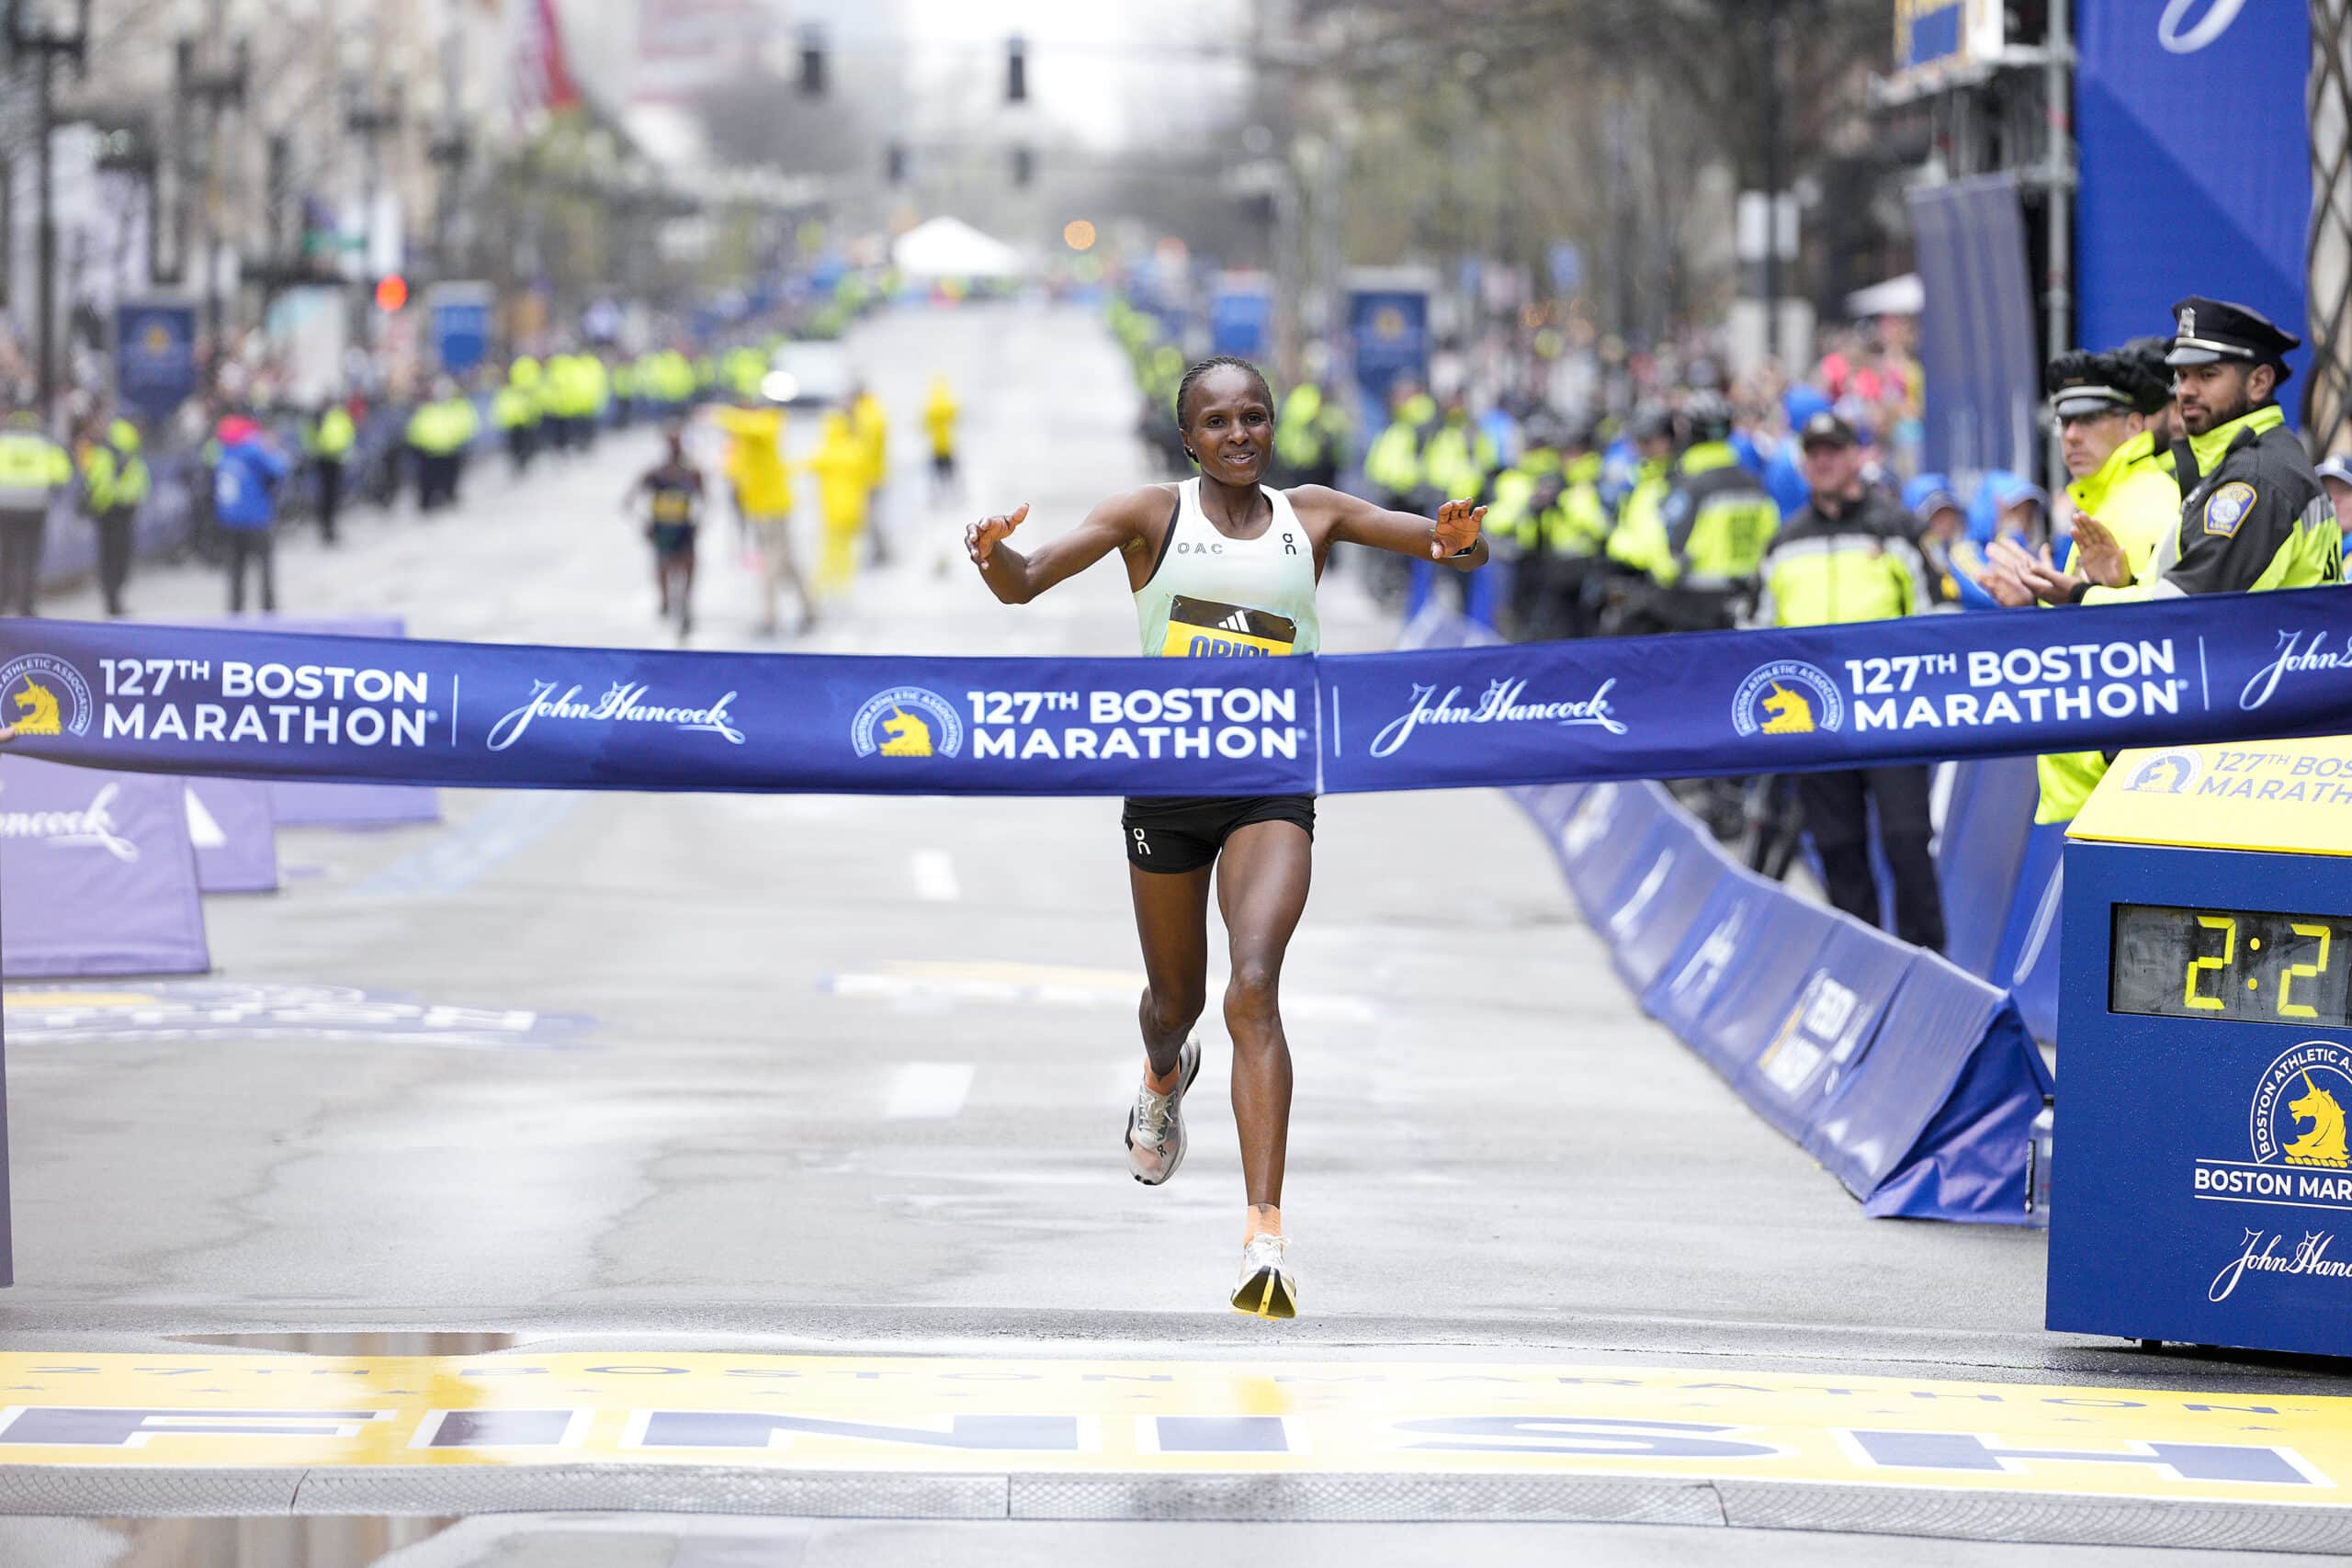 Hellen Obiri and Evans Chebet’s amazing performances at the 2023 Boston Marathon